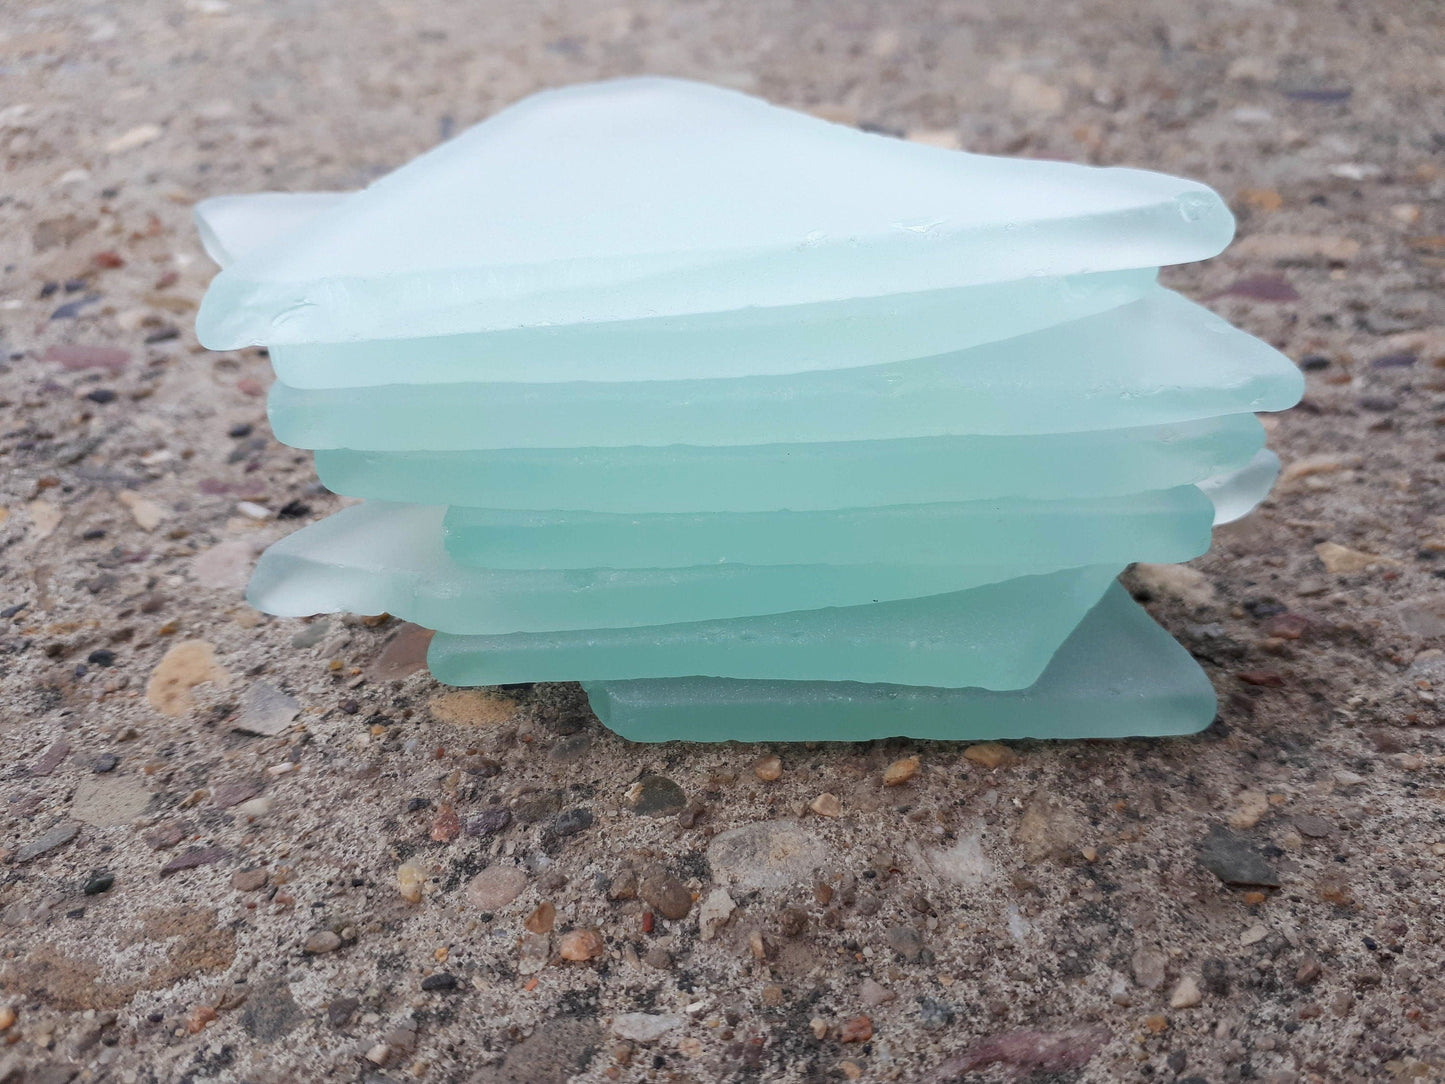 CUSTOM - 170 Sea glass place cards - Light sea green - Irregular shapes